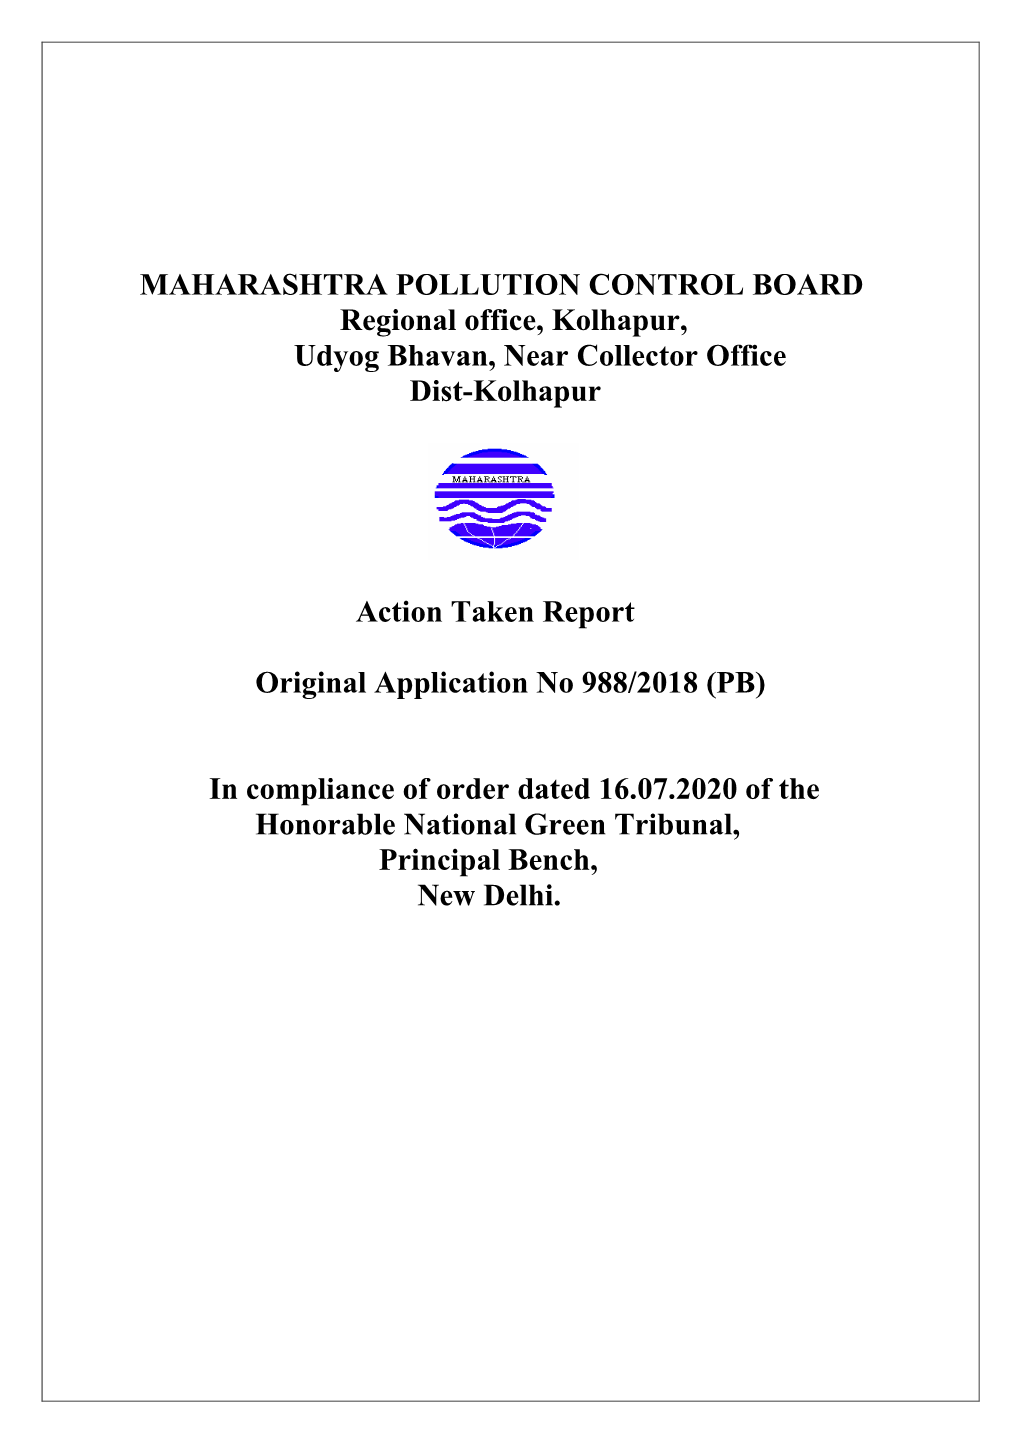 MAHARASHTRA POLLUTION CONTROL BOARD Regional Office, Kolhapur, Udyog Bhavan, Near Collector Office Dist-Kolhapur